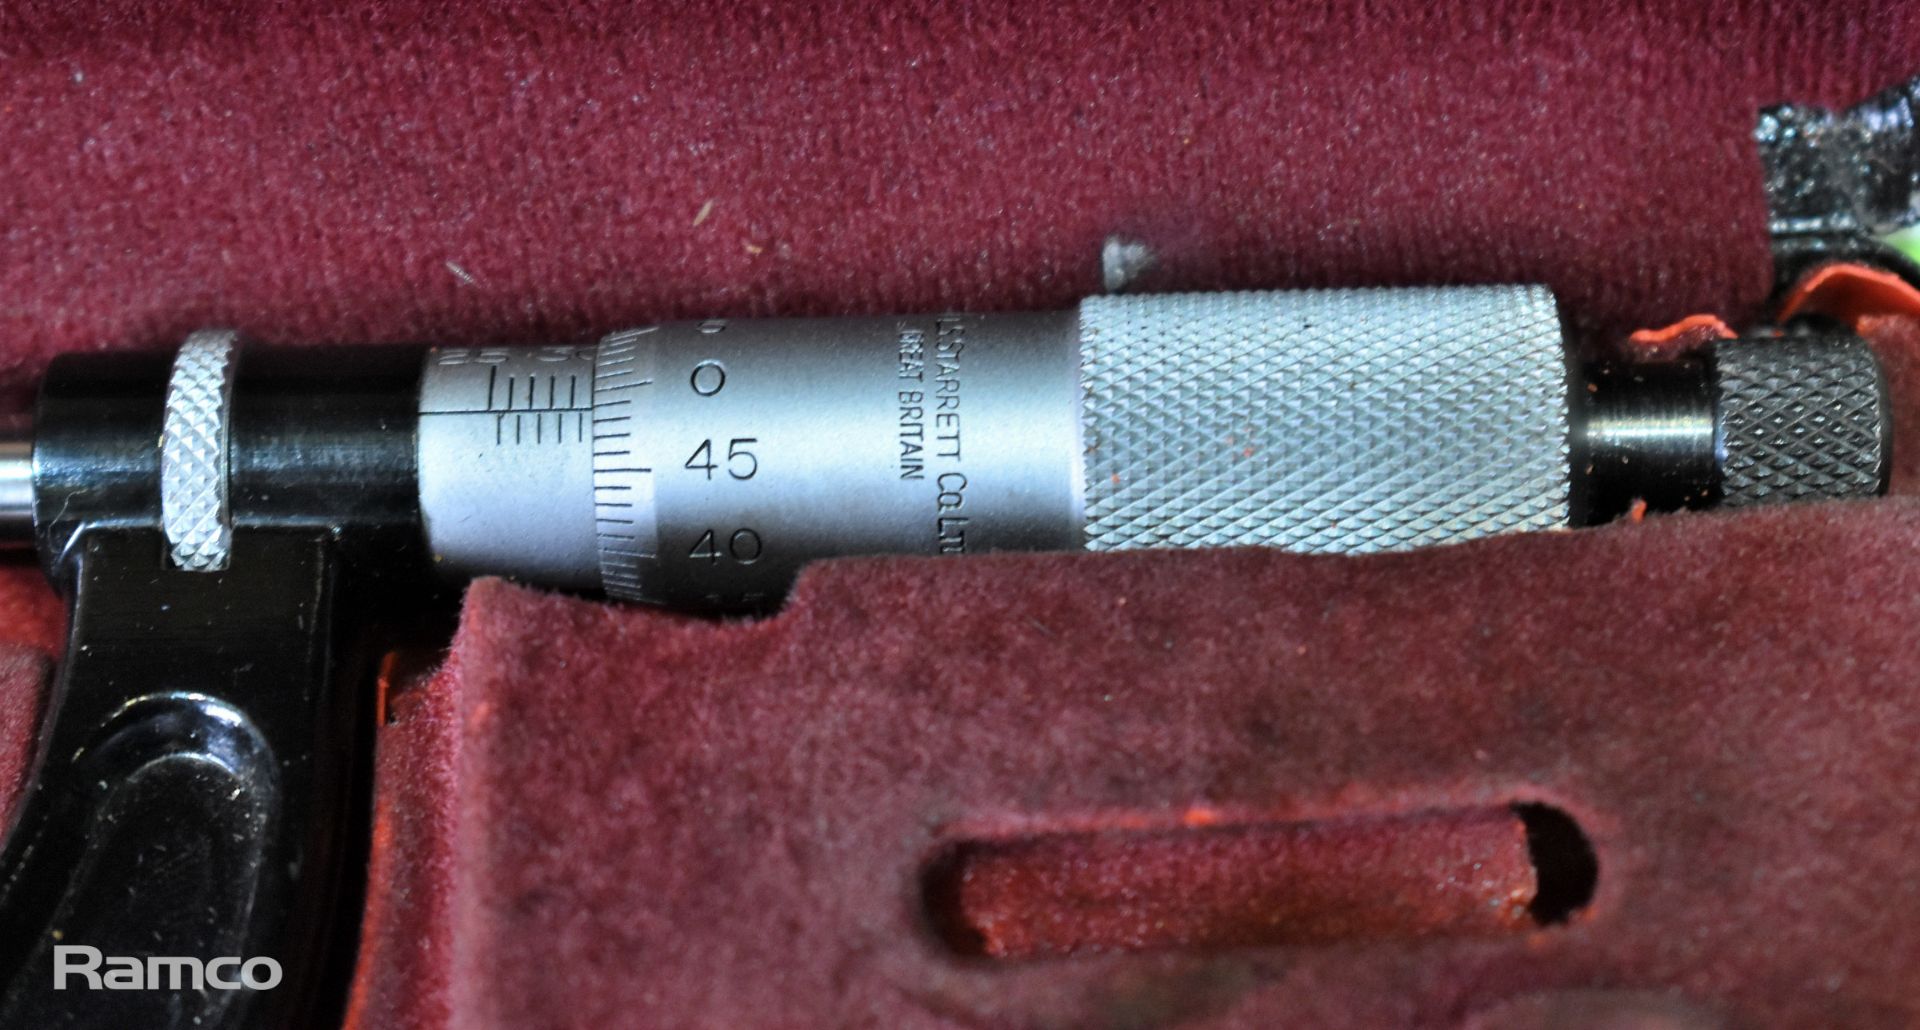 Starrett No 436 25-50mm micrometer caliper with case (incomplete) - Image 3 of 4